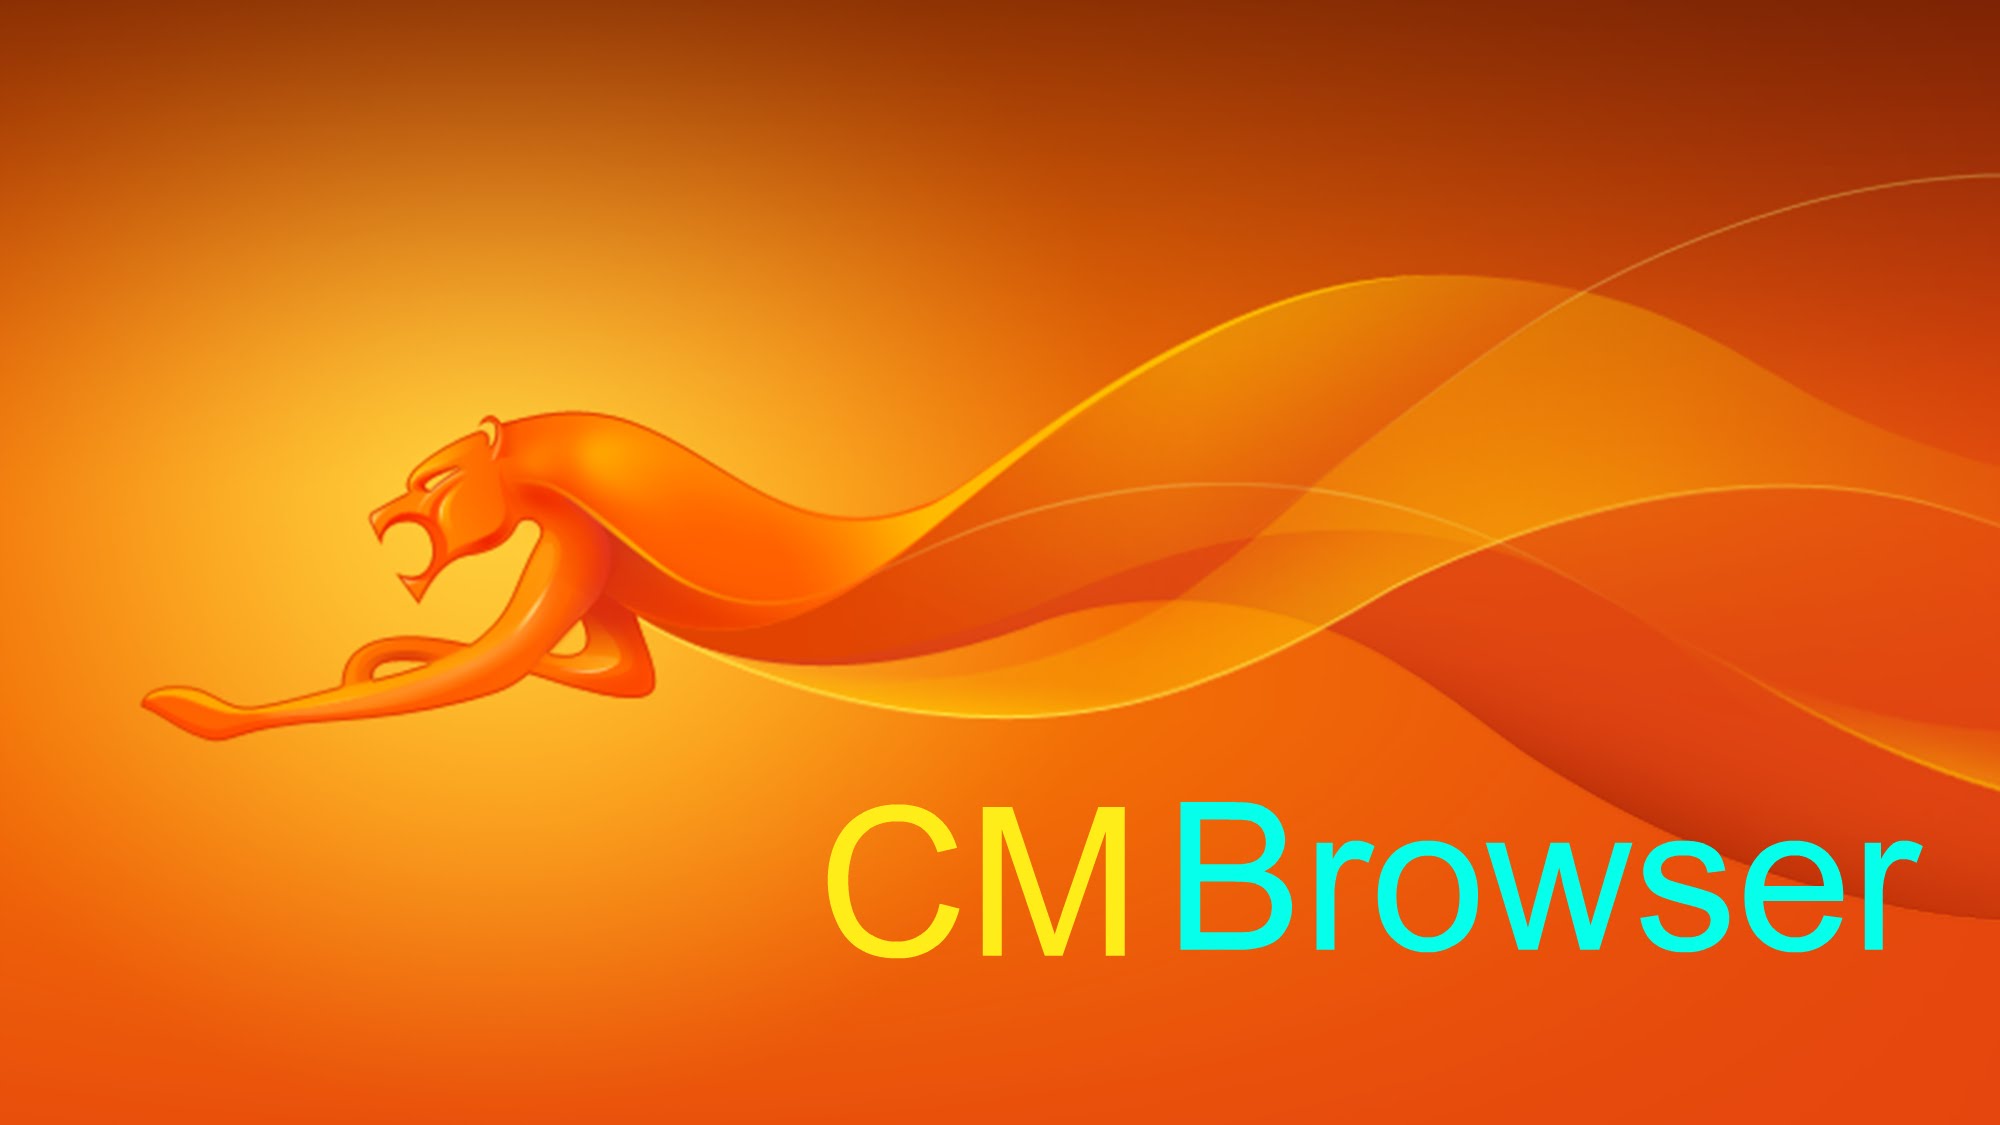 CM Browser